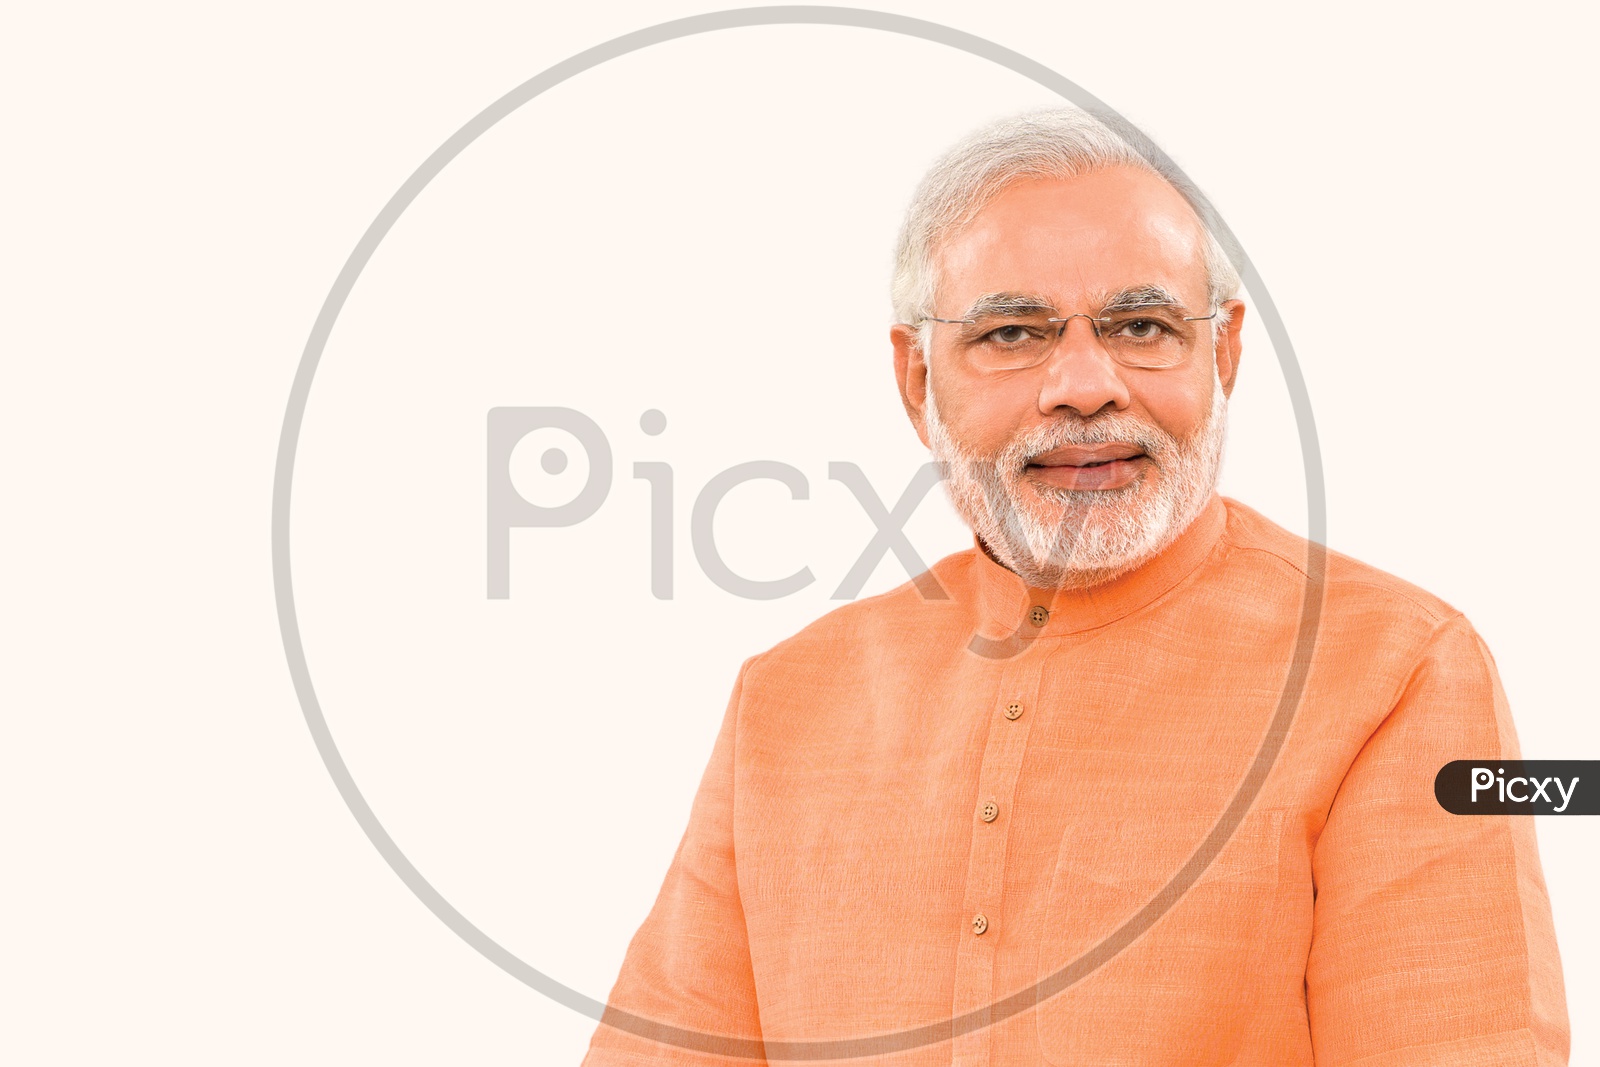 Prime Minister of India Narendra Modi smiling with white background in orange suit